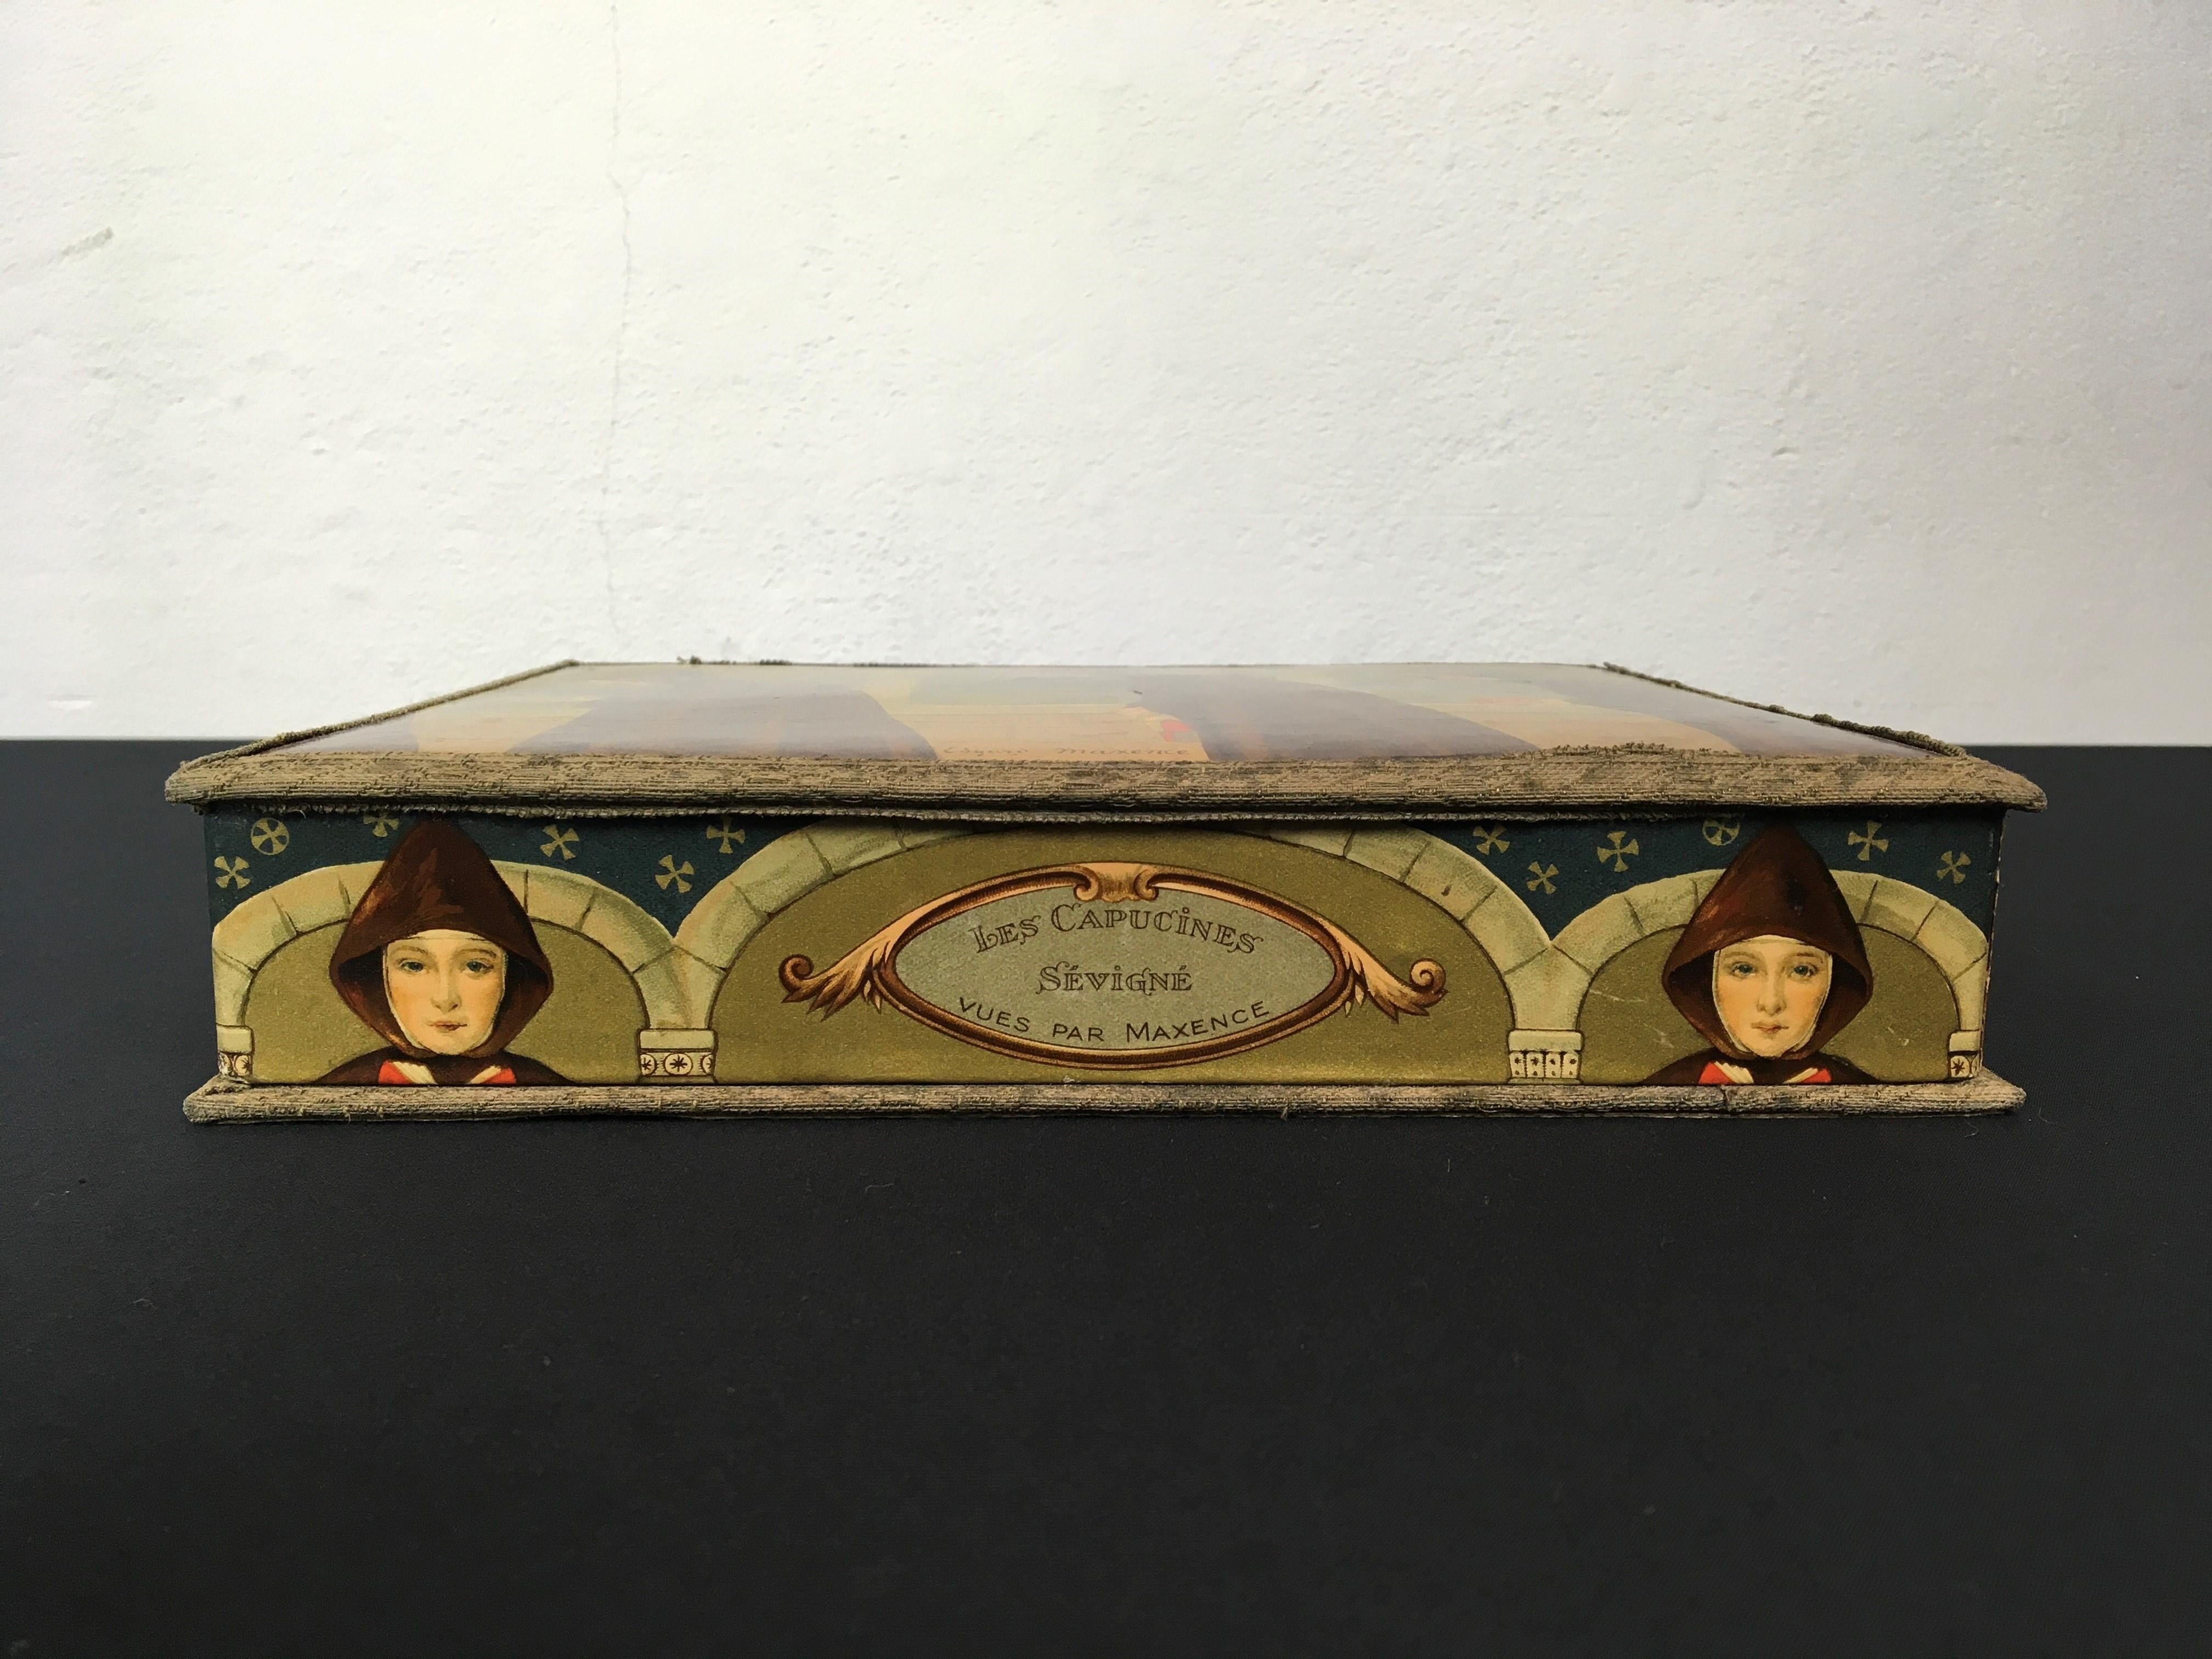 20th Century French Chocolate Box, Edgard Maxence, Marquise de Sévigné Paris For Sale